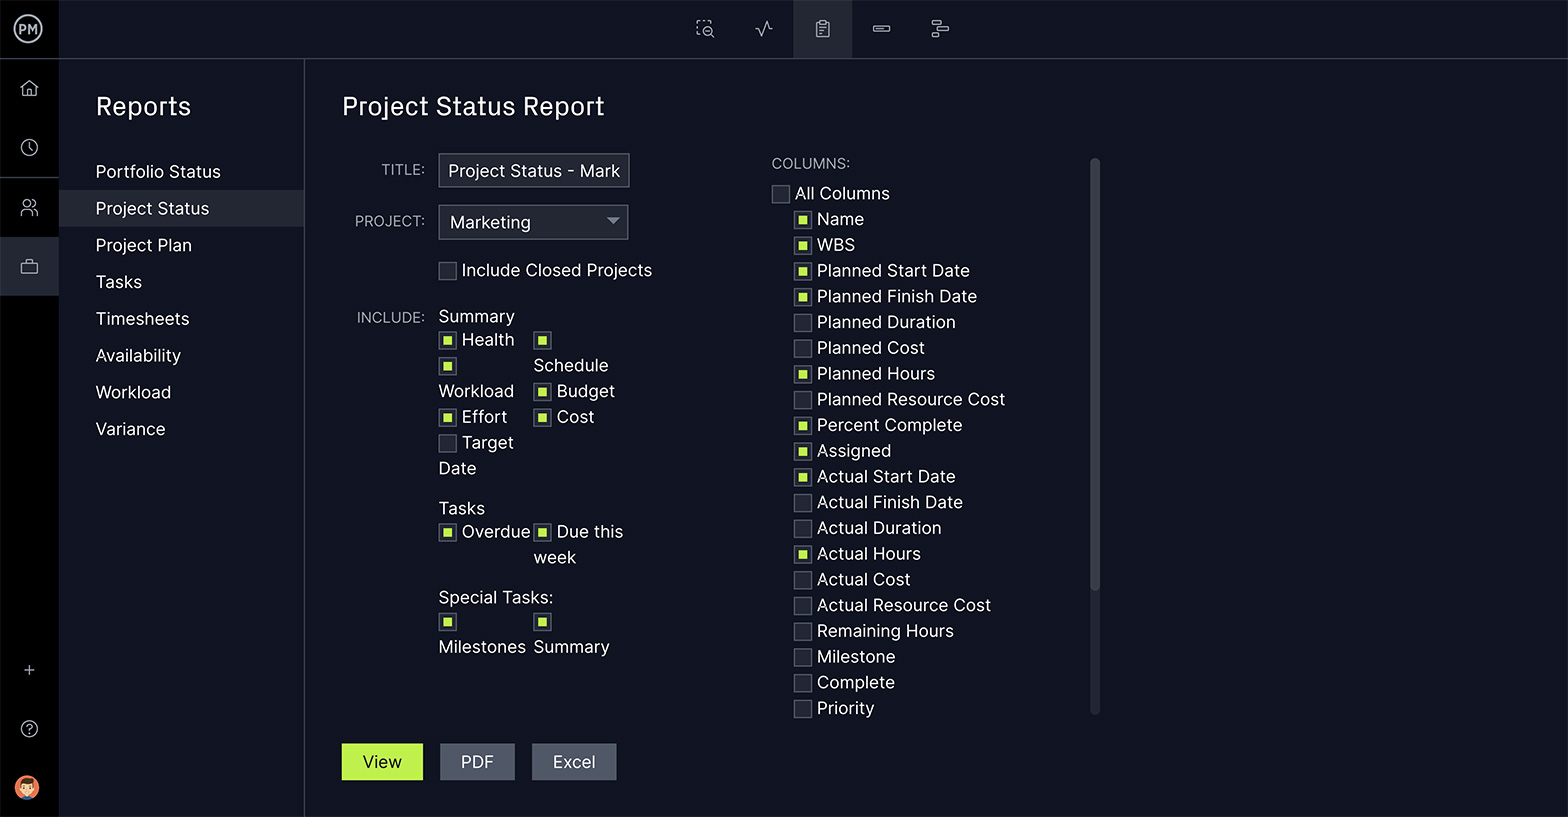 ProjectManager's status report